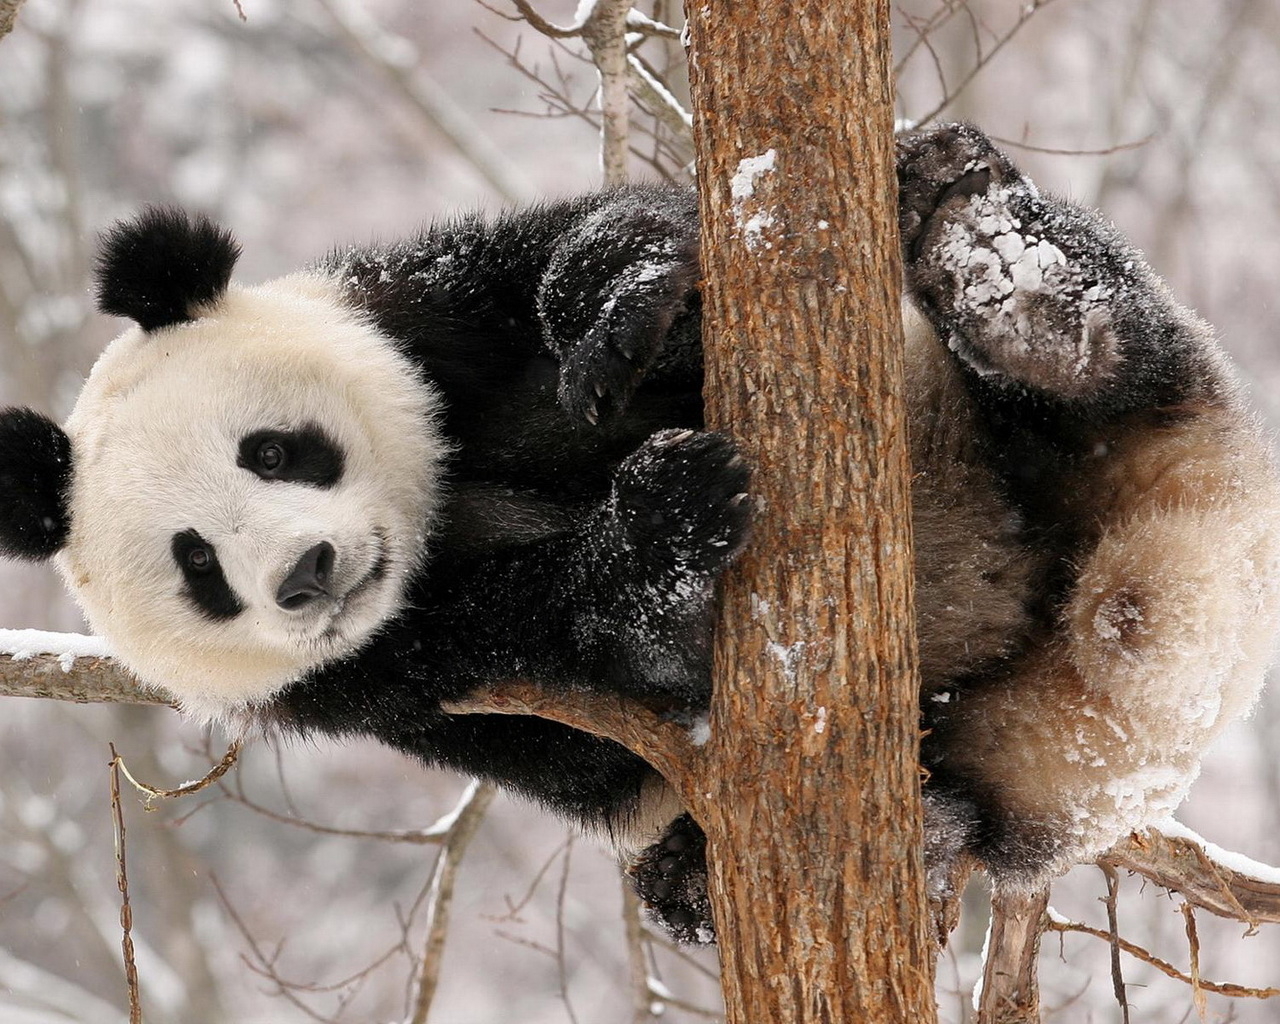 Panda in tree